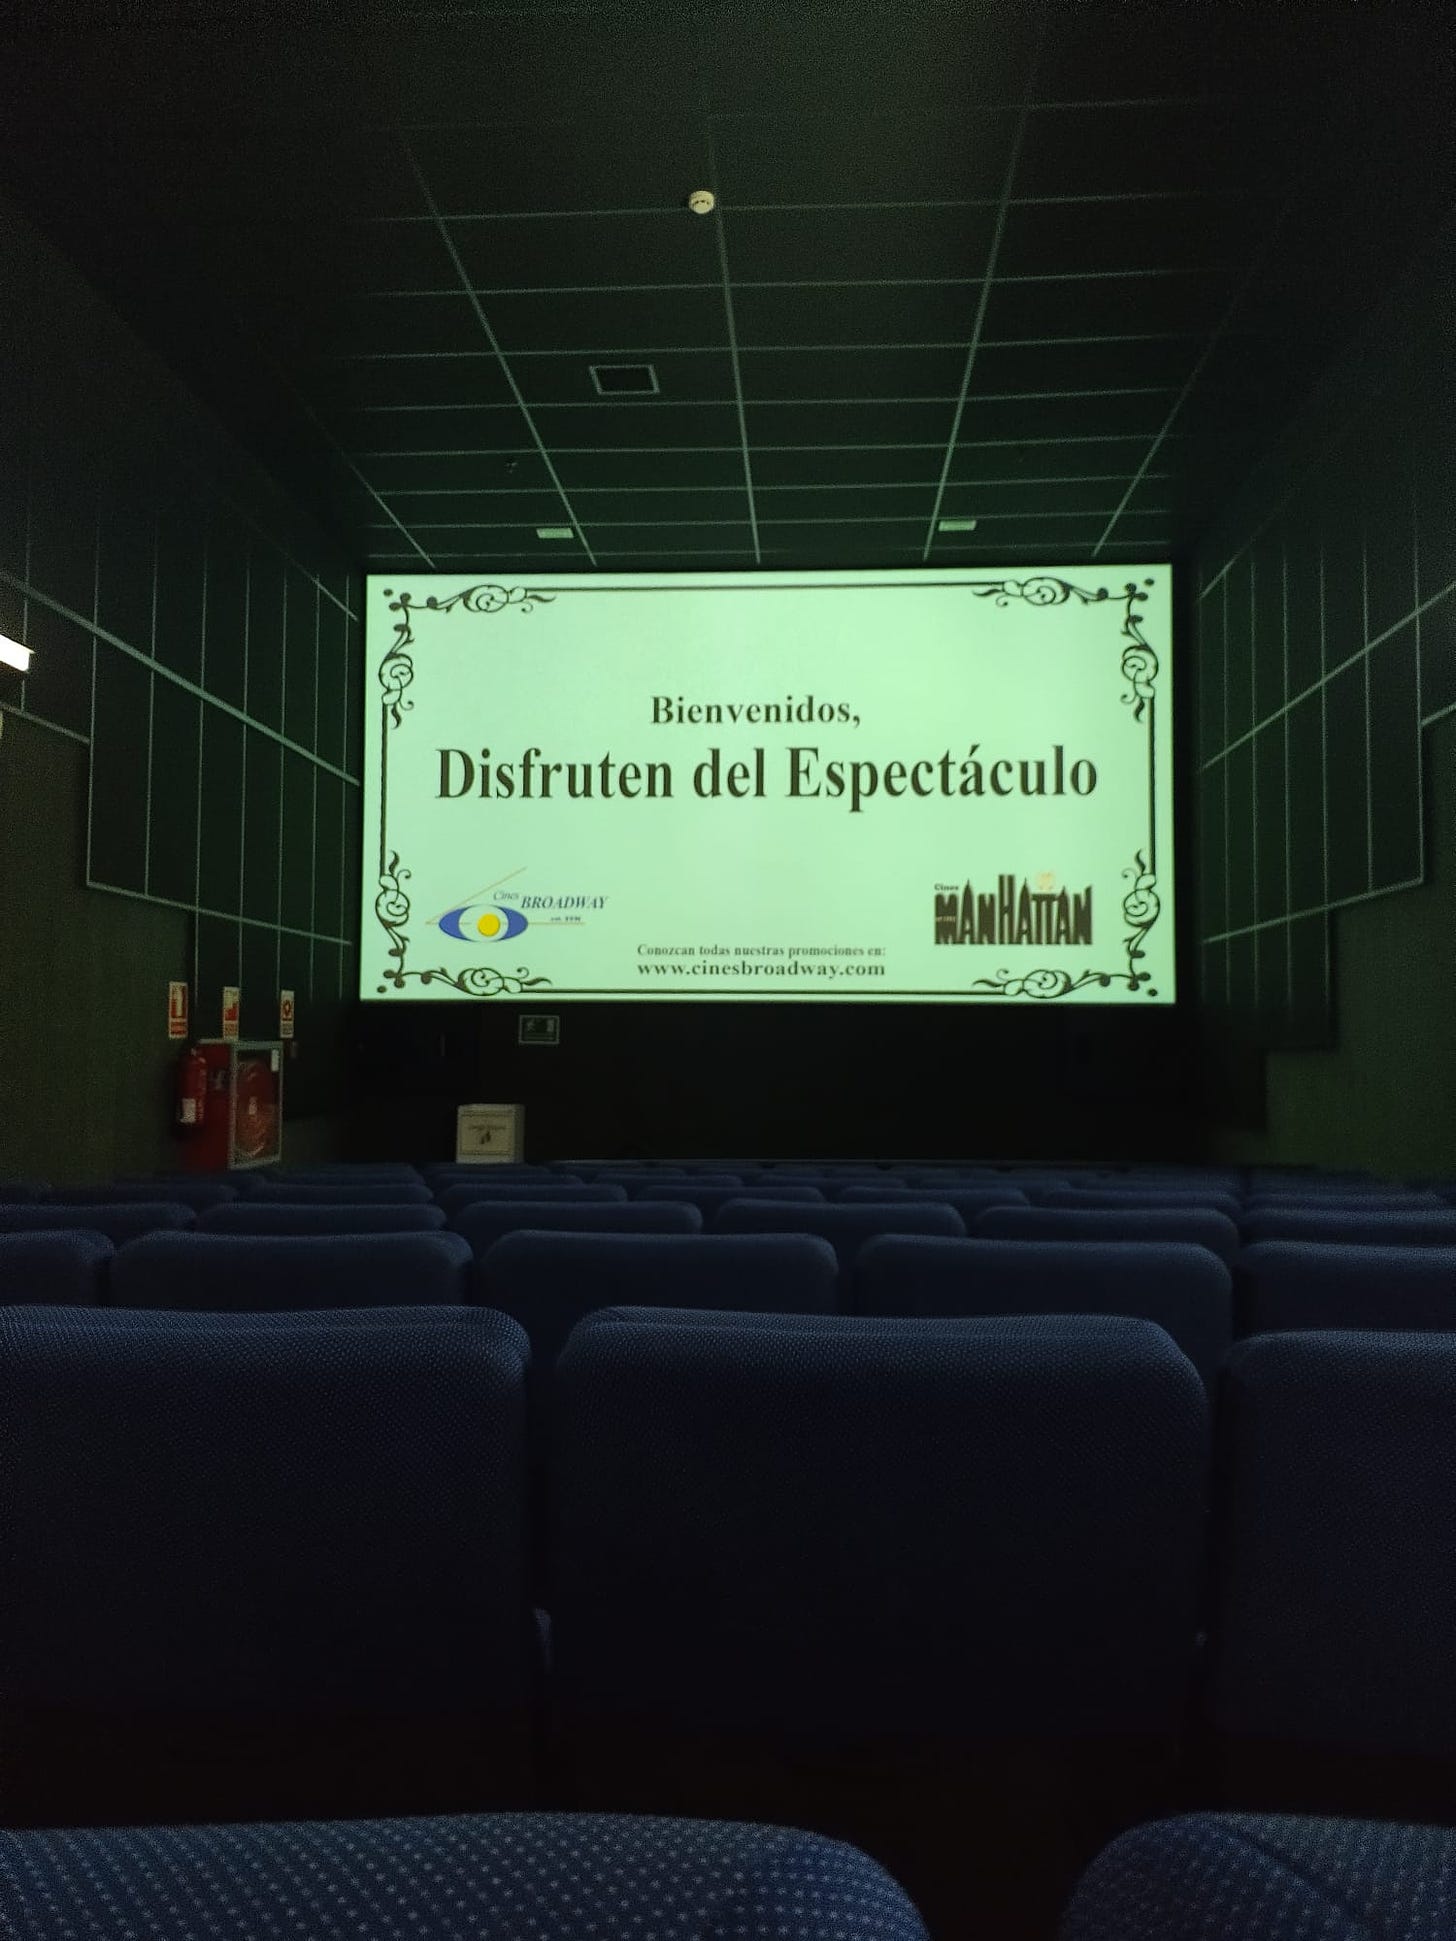 Sala de cinema, antes do filme começar, na tela lê-se "bienvenidos, desfrutén del espectáculo"